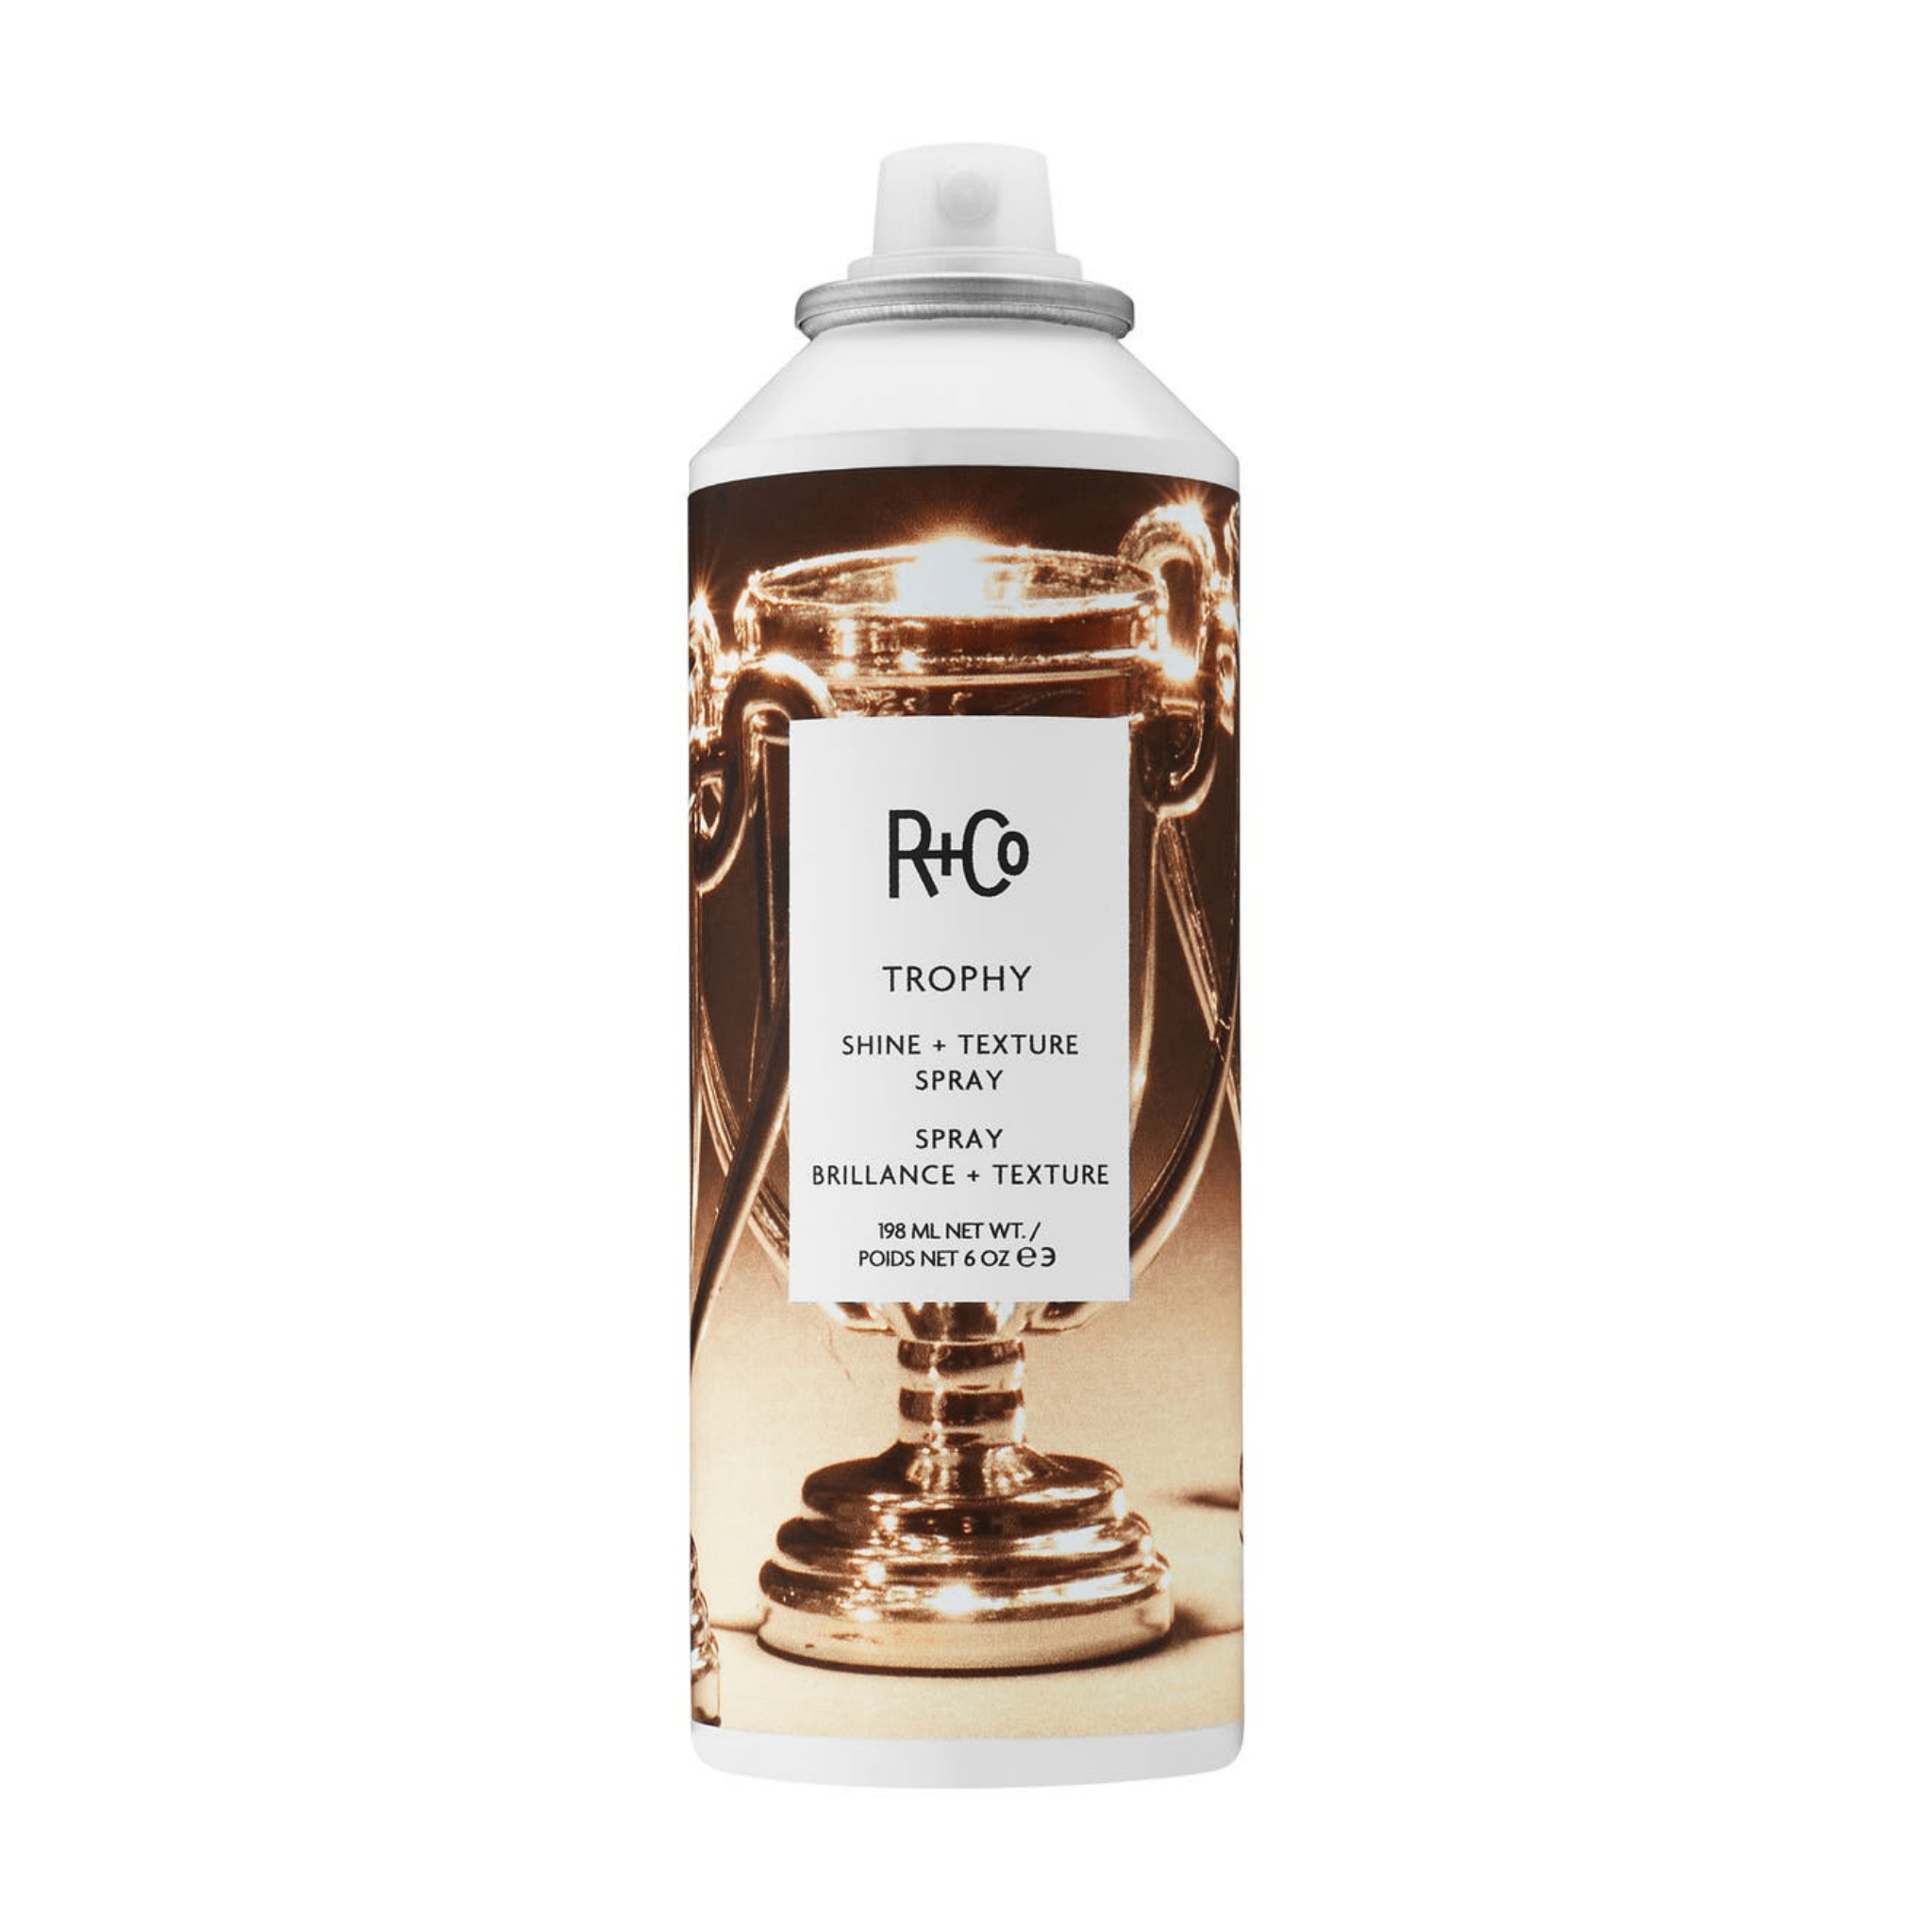 R+Co. Trophy Spray Brillance + Texture - 198 ml - Concept C. Shop